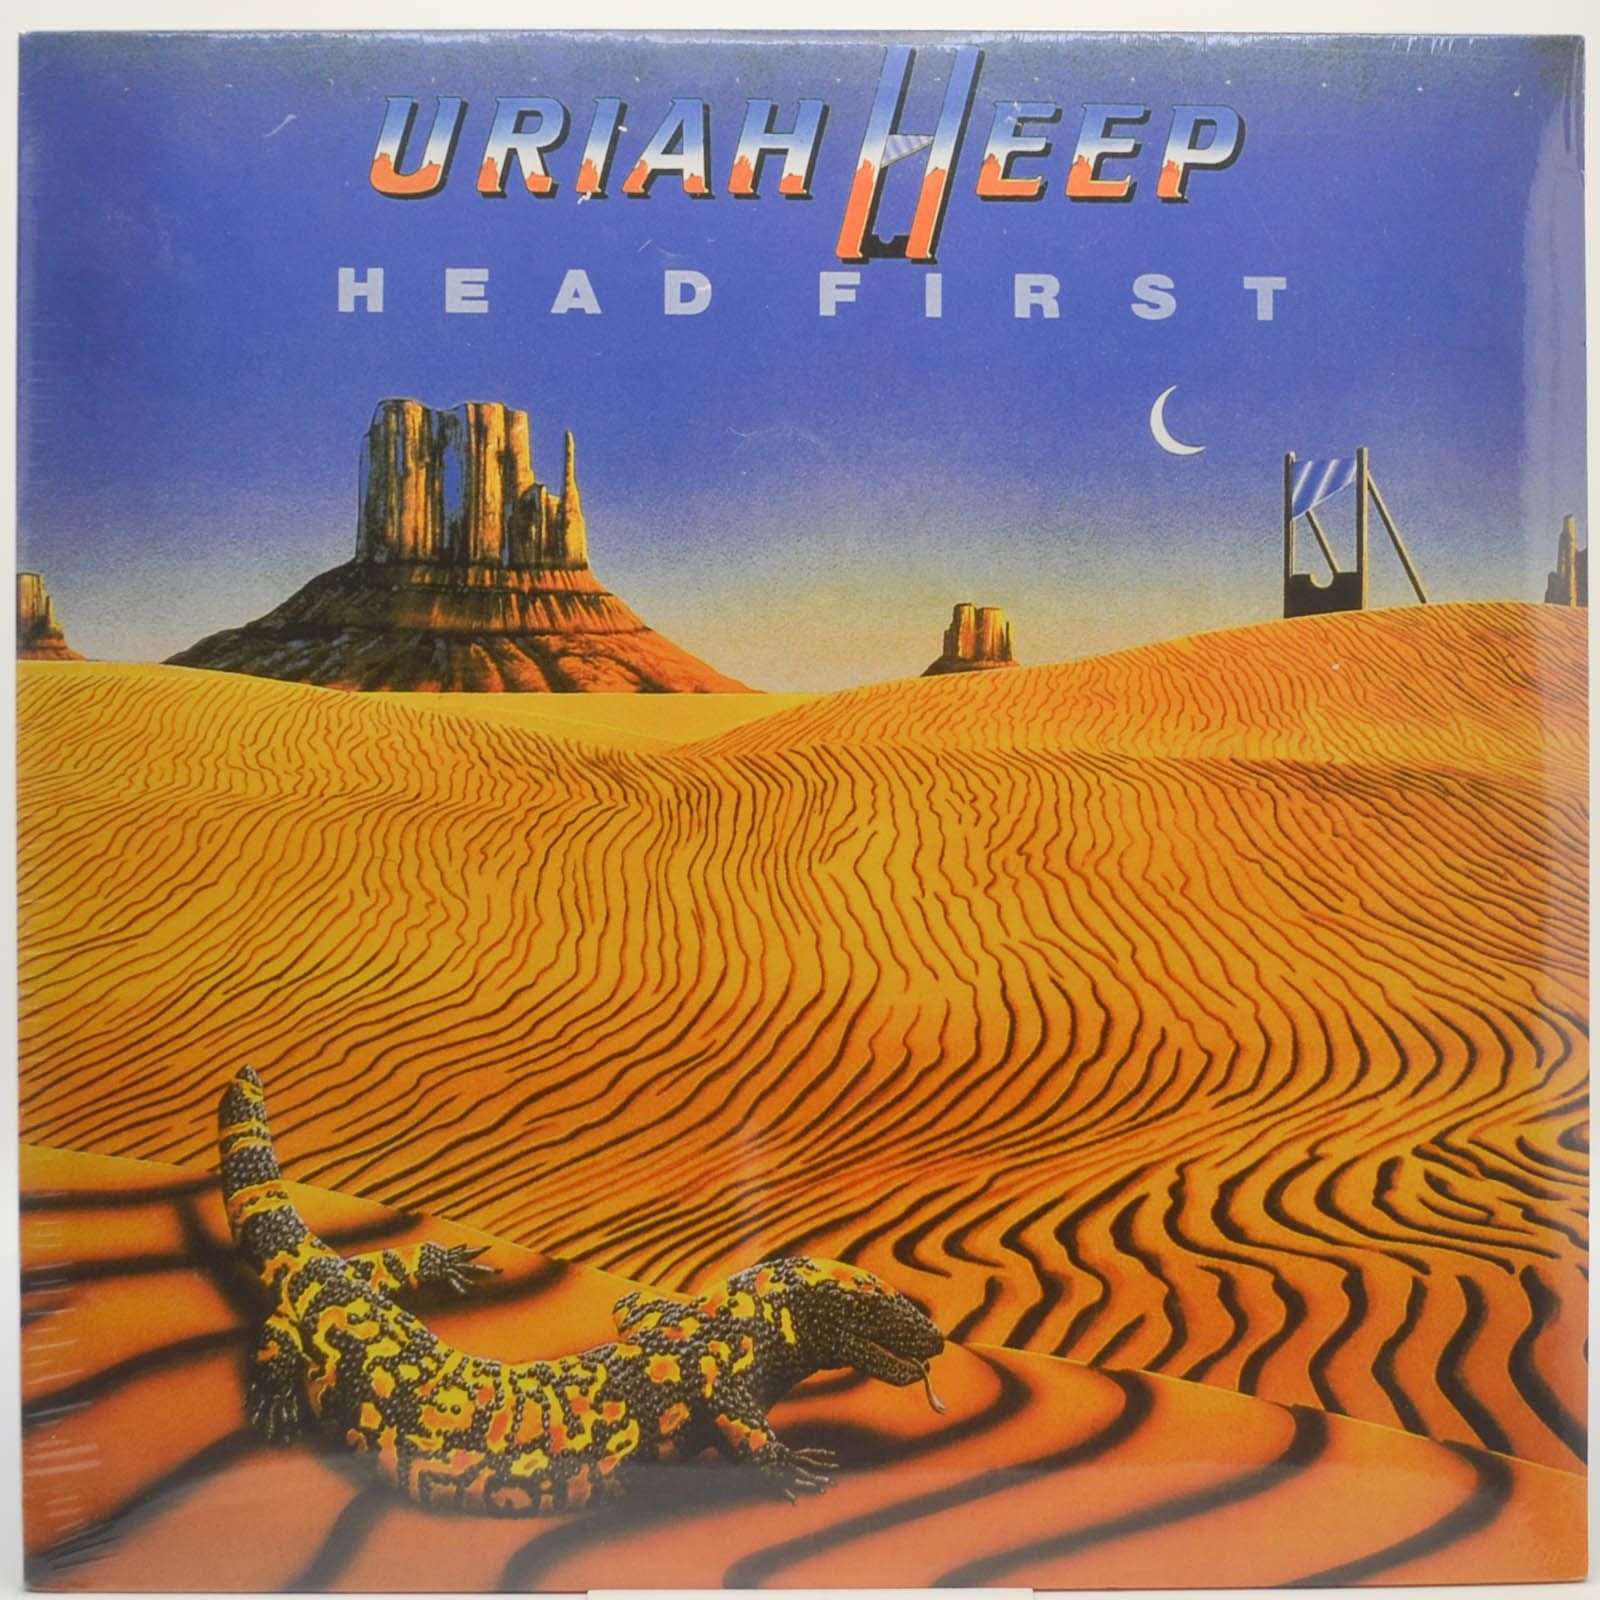 Head First (UK), 1983